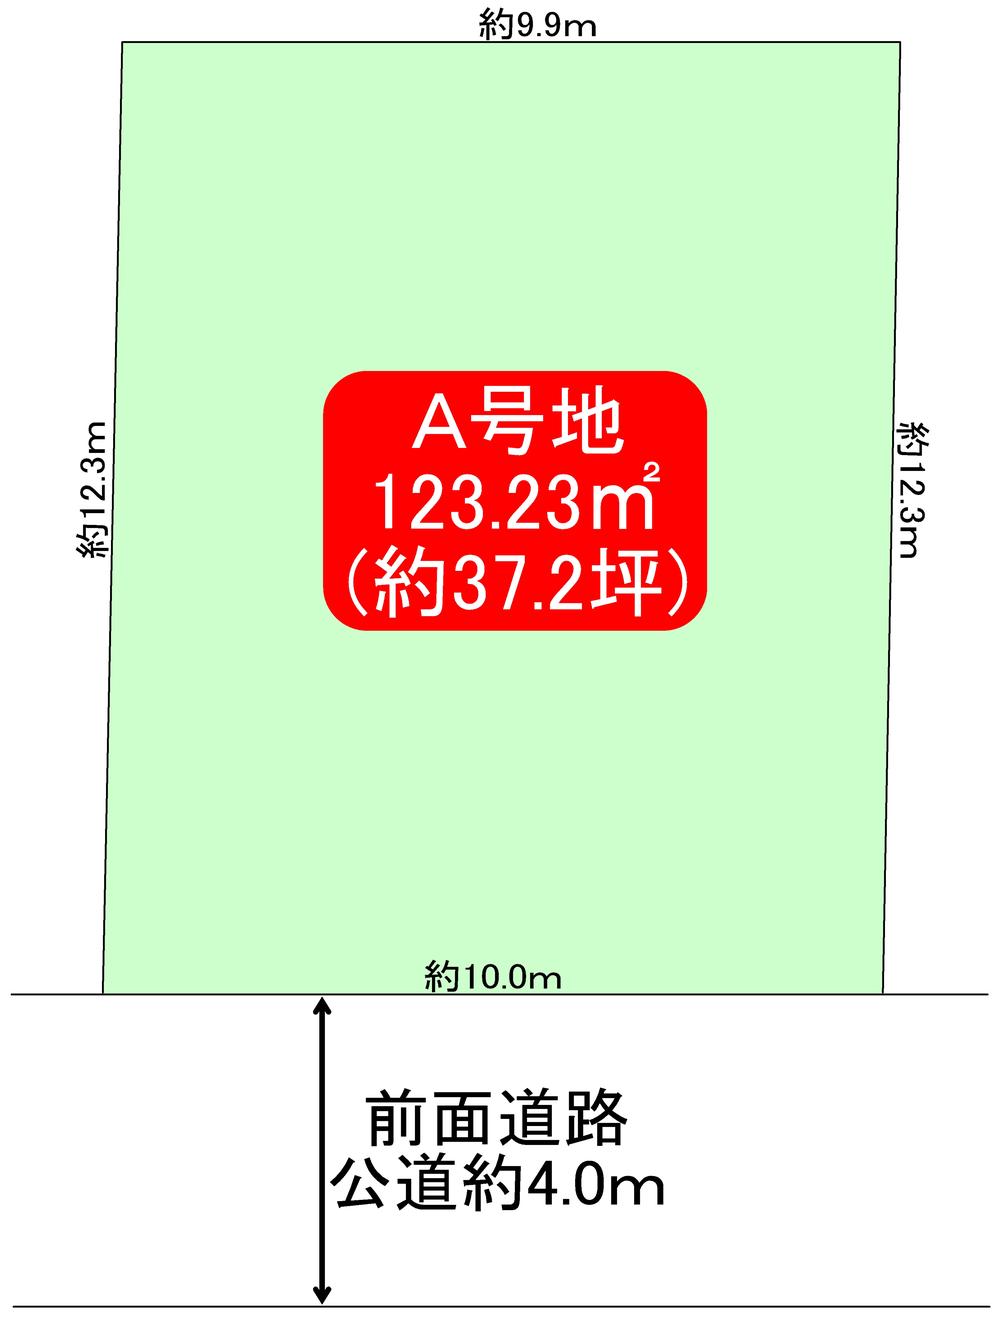 Compartment figure. Land price 29.6 million yen, Land area 123.23 sq m